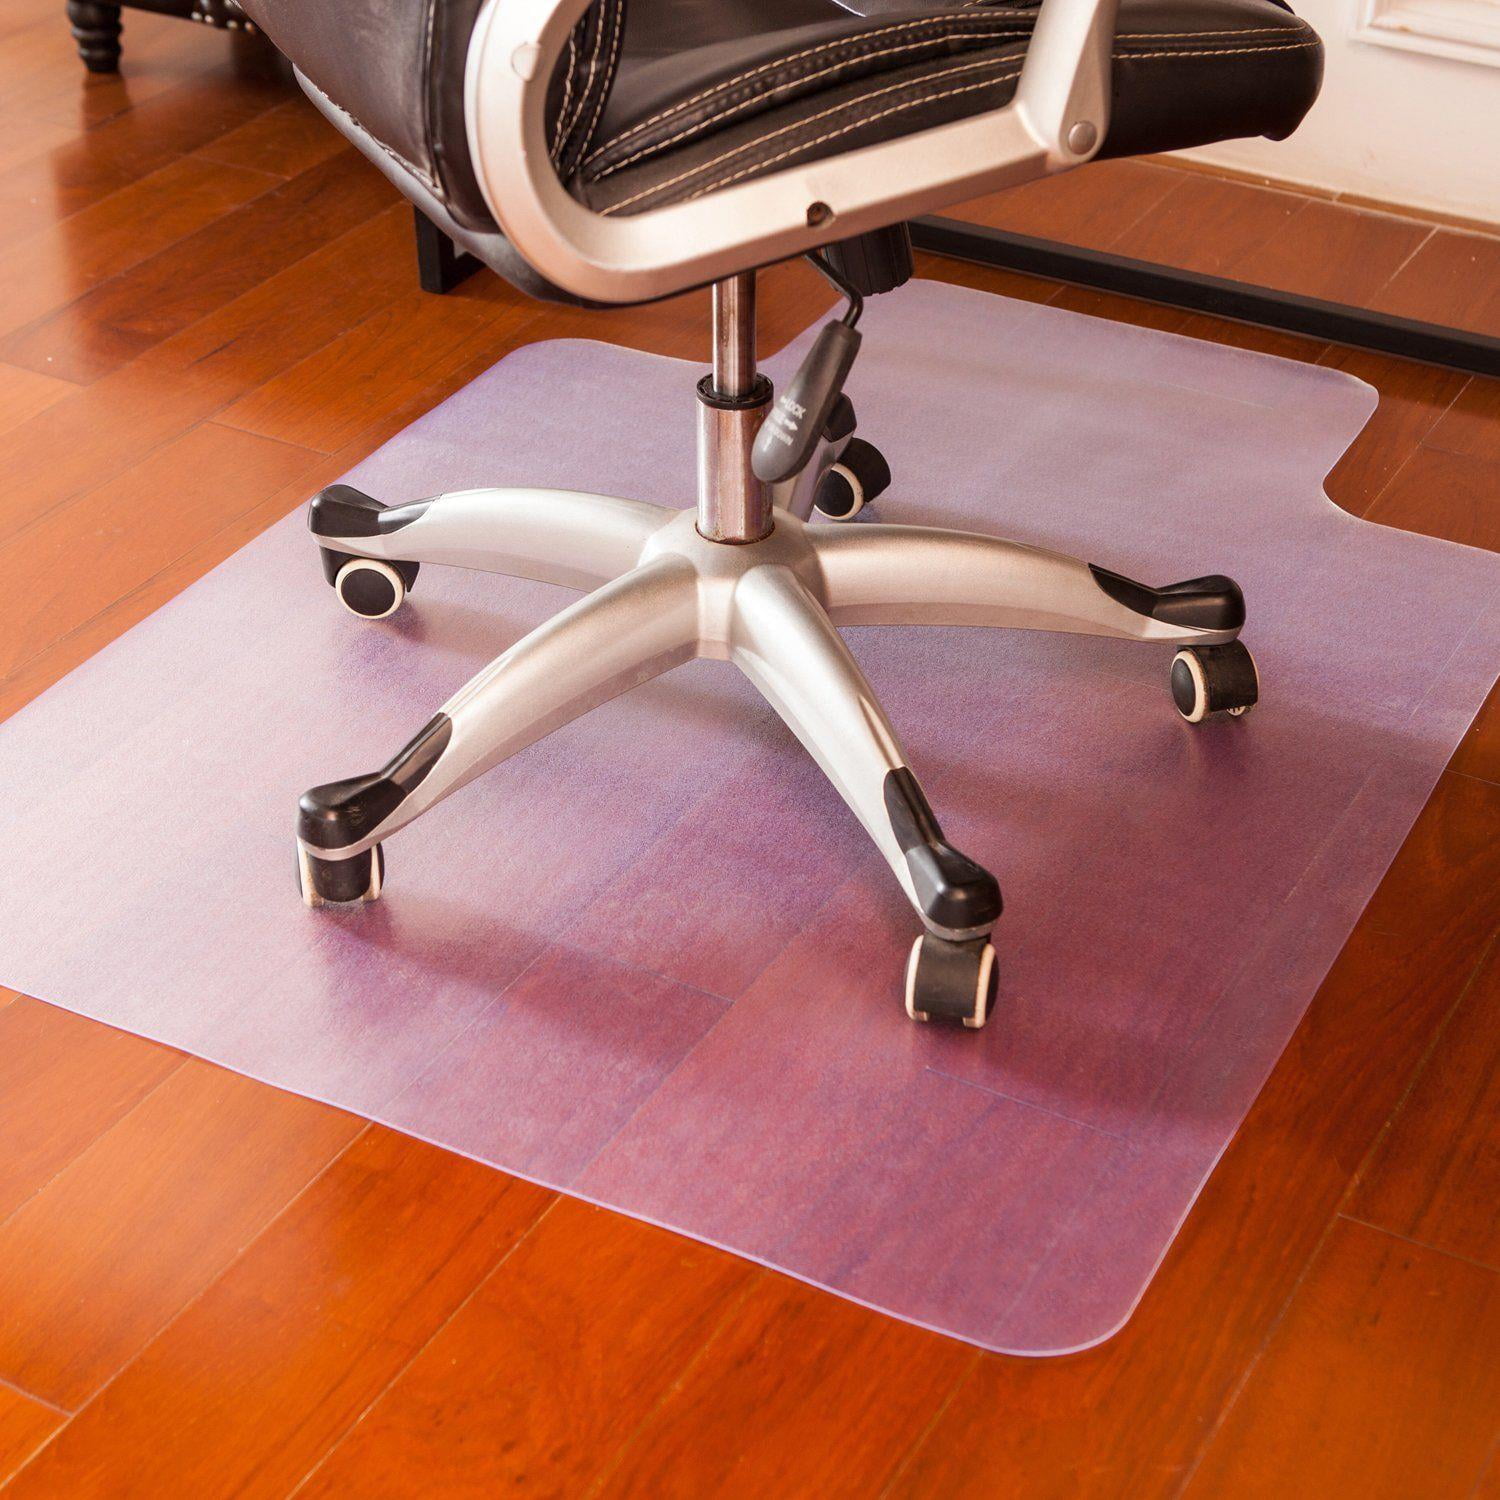 Ktaxon Office Chair Mat For Hardwood Floors Protector Non Slip Rug Pvc Mats Walmart Com Walmart Com